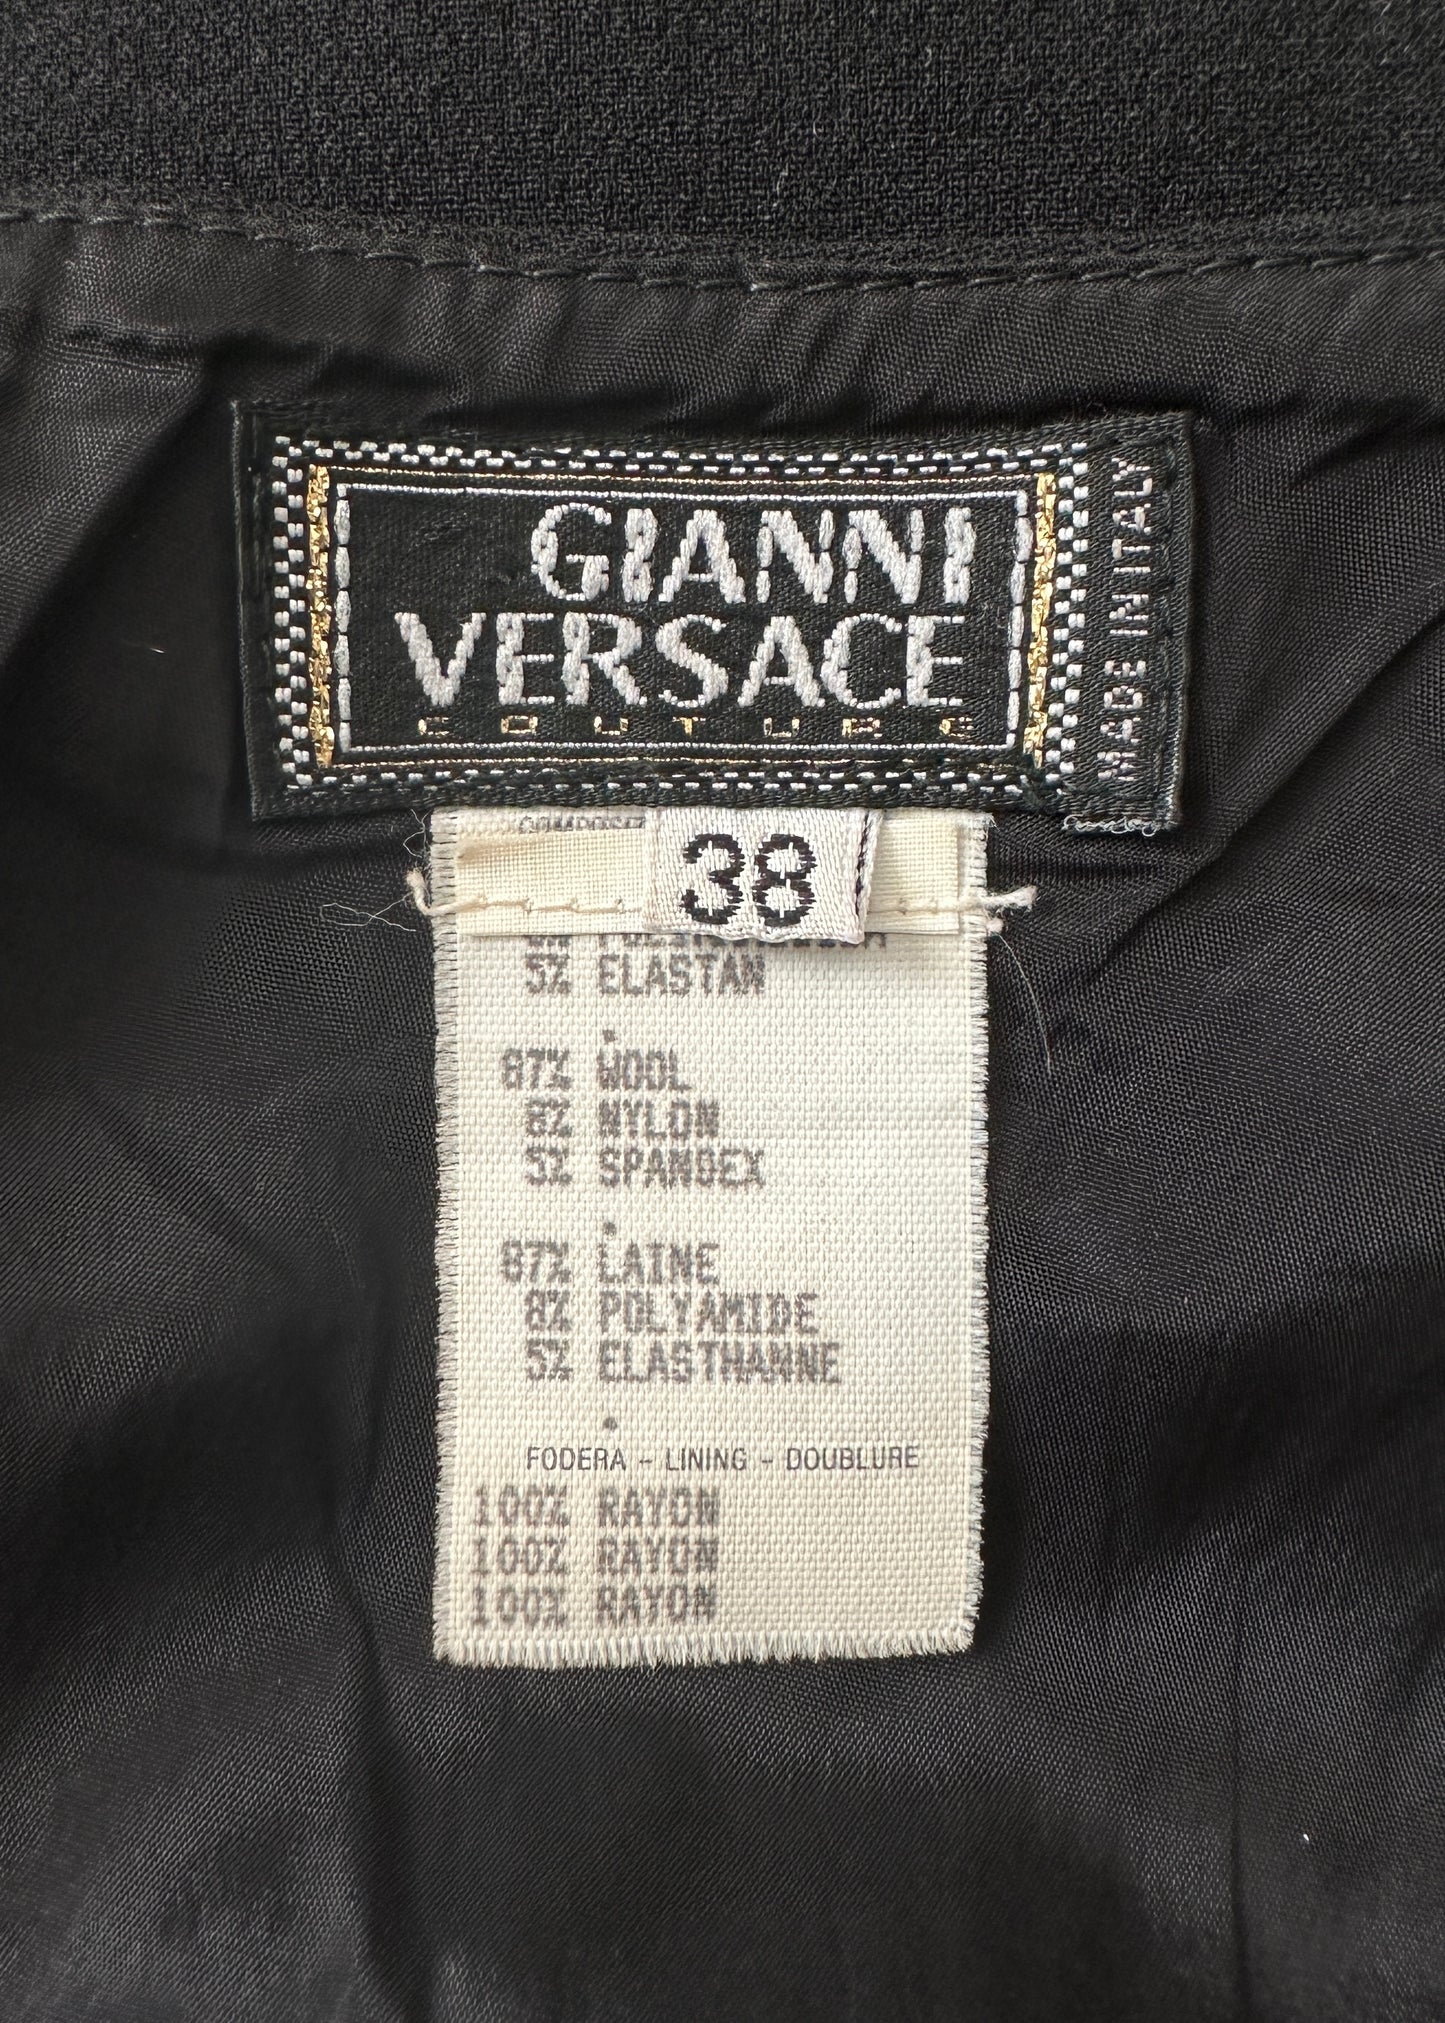 Versace Black Mesh Stripe Mini Skirt